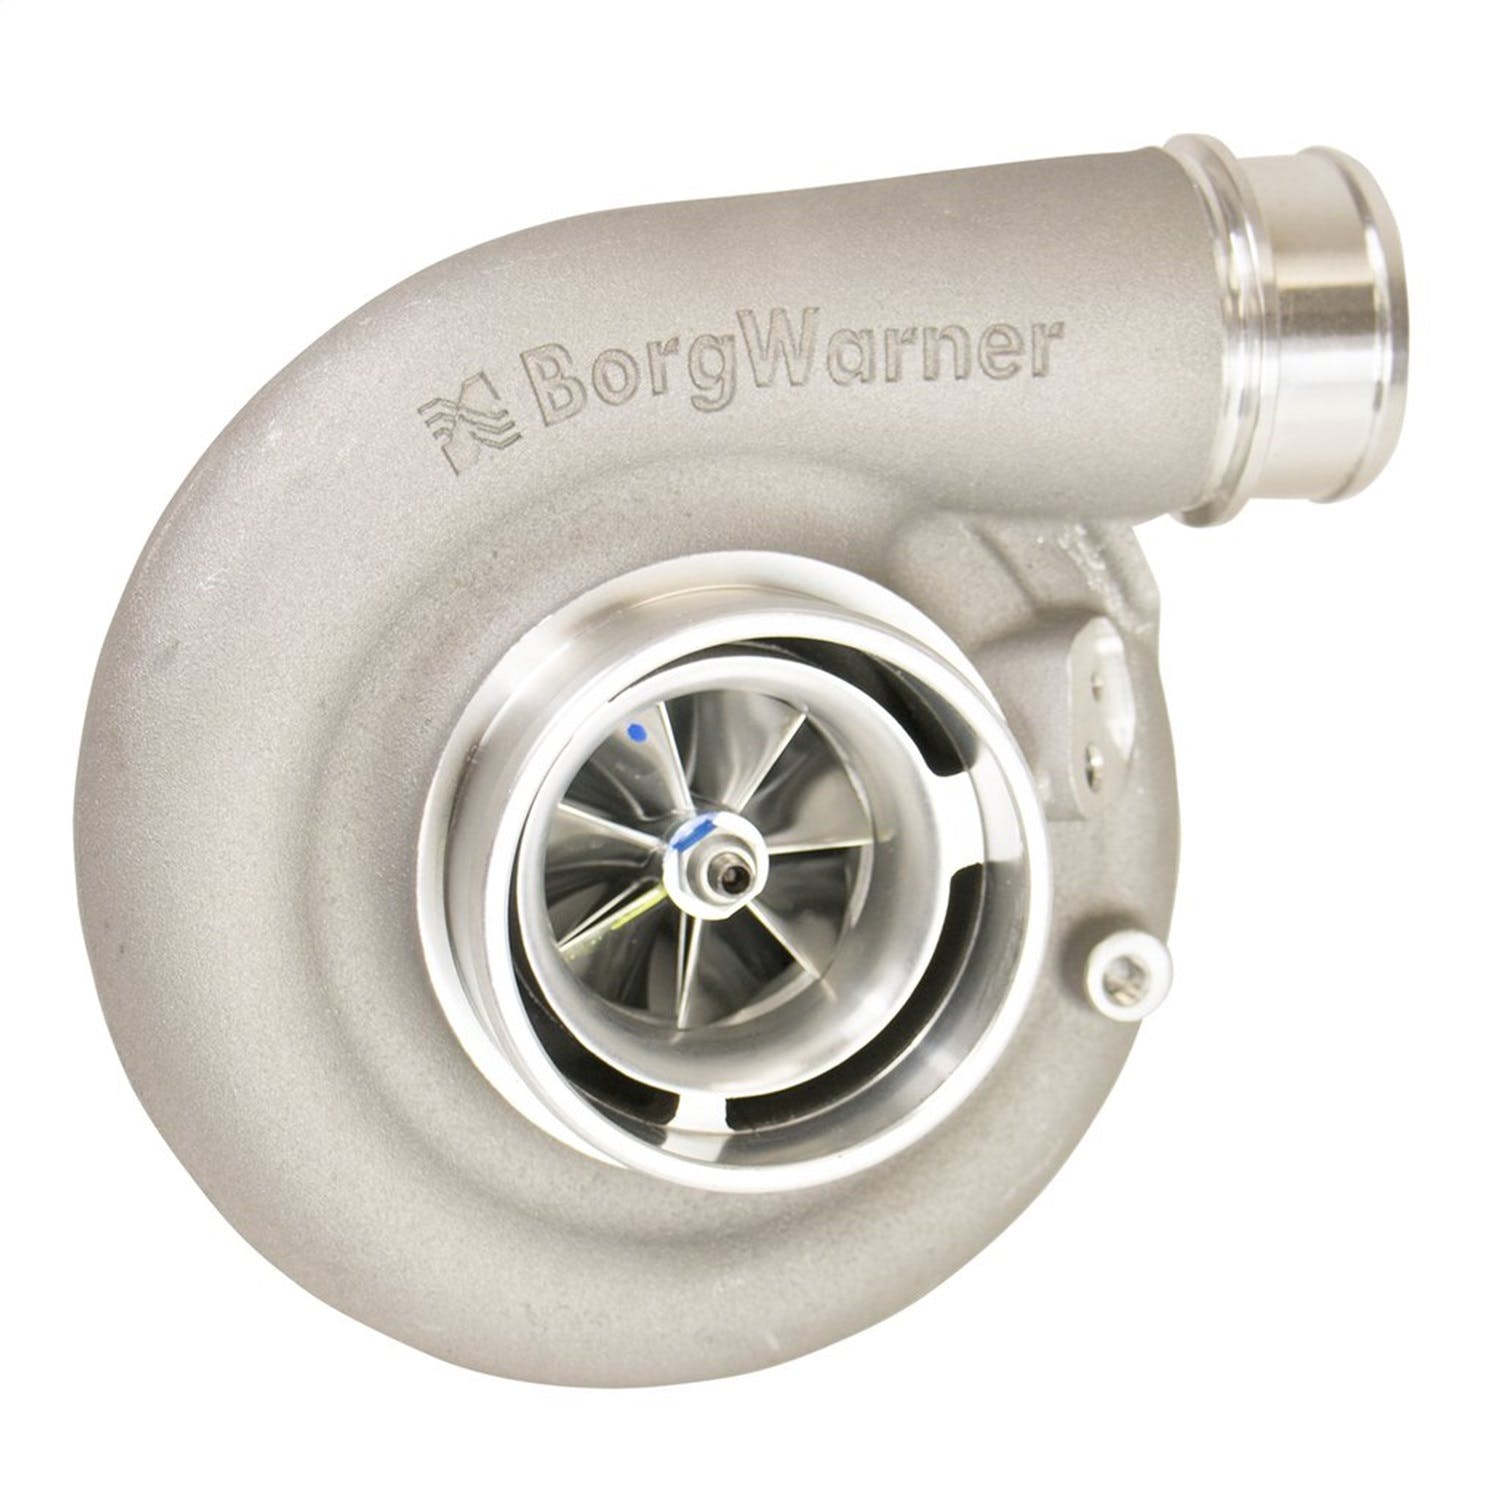 BD Diesel Performance 13009097047 Borg Warner Turbo Upgrade